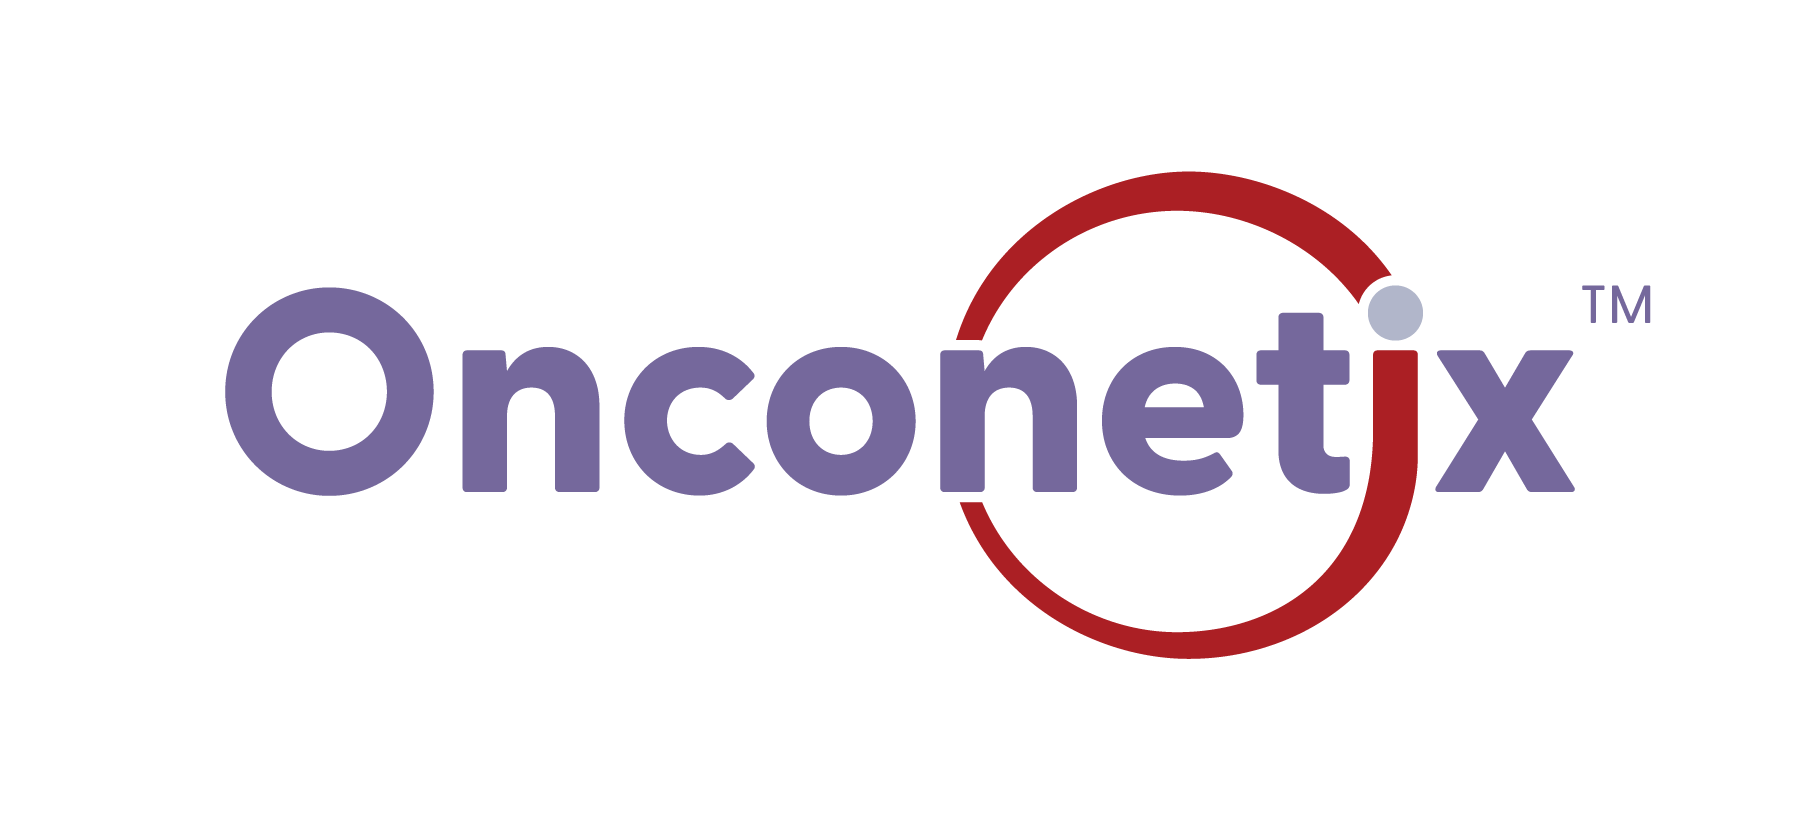 onconetix-logo.png